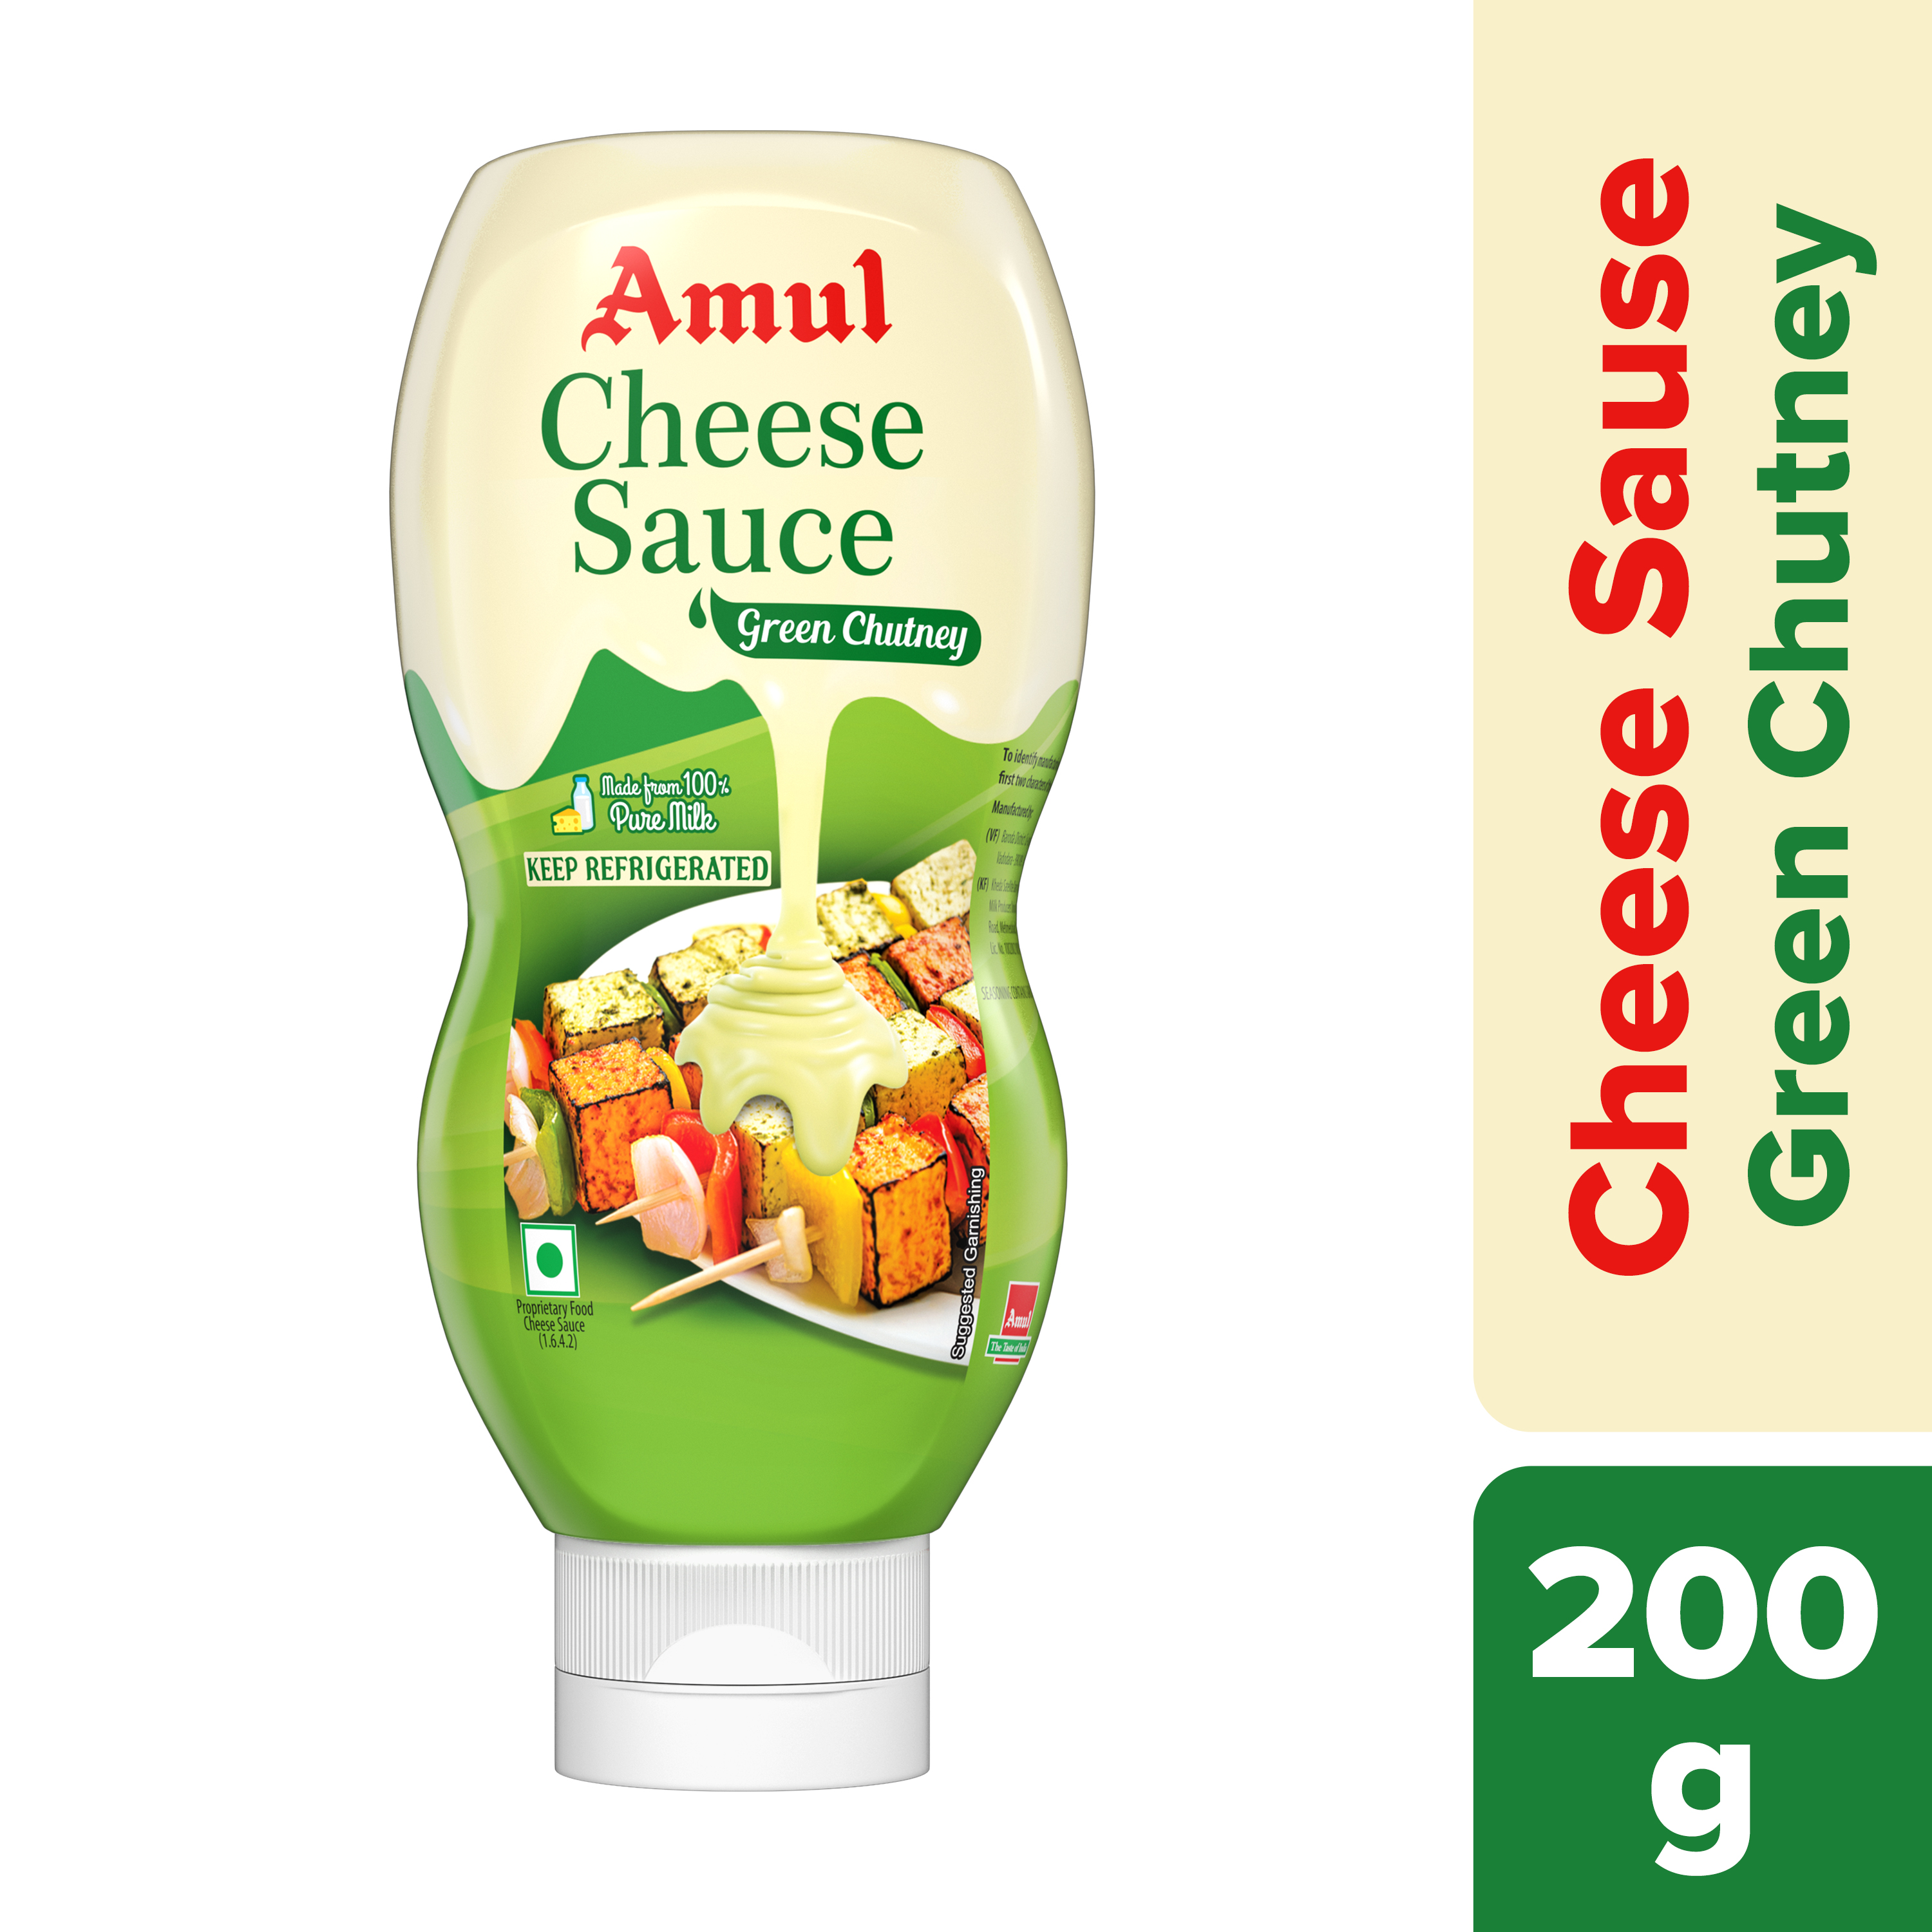 Amul Cheese Sauce - Green Chutney